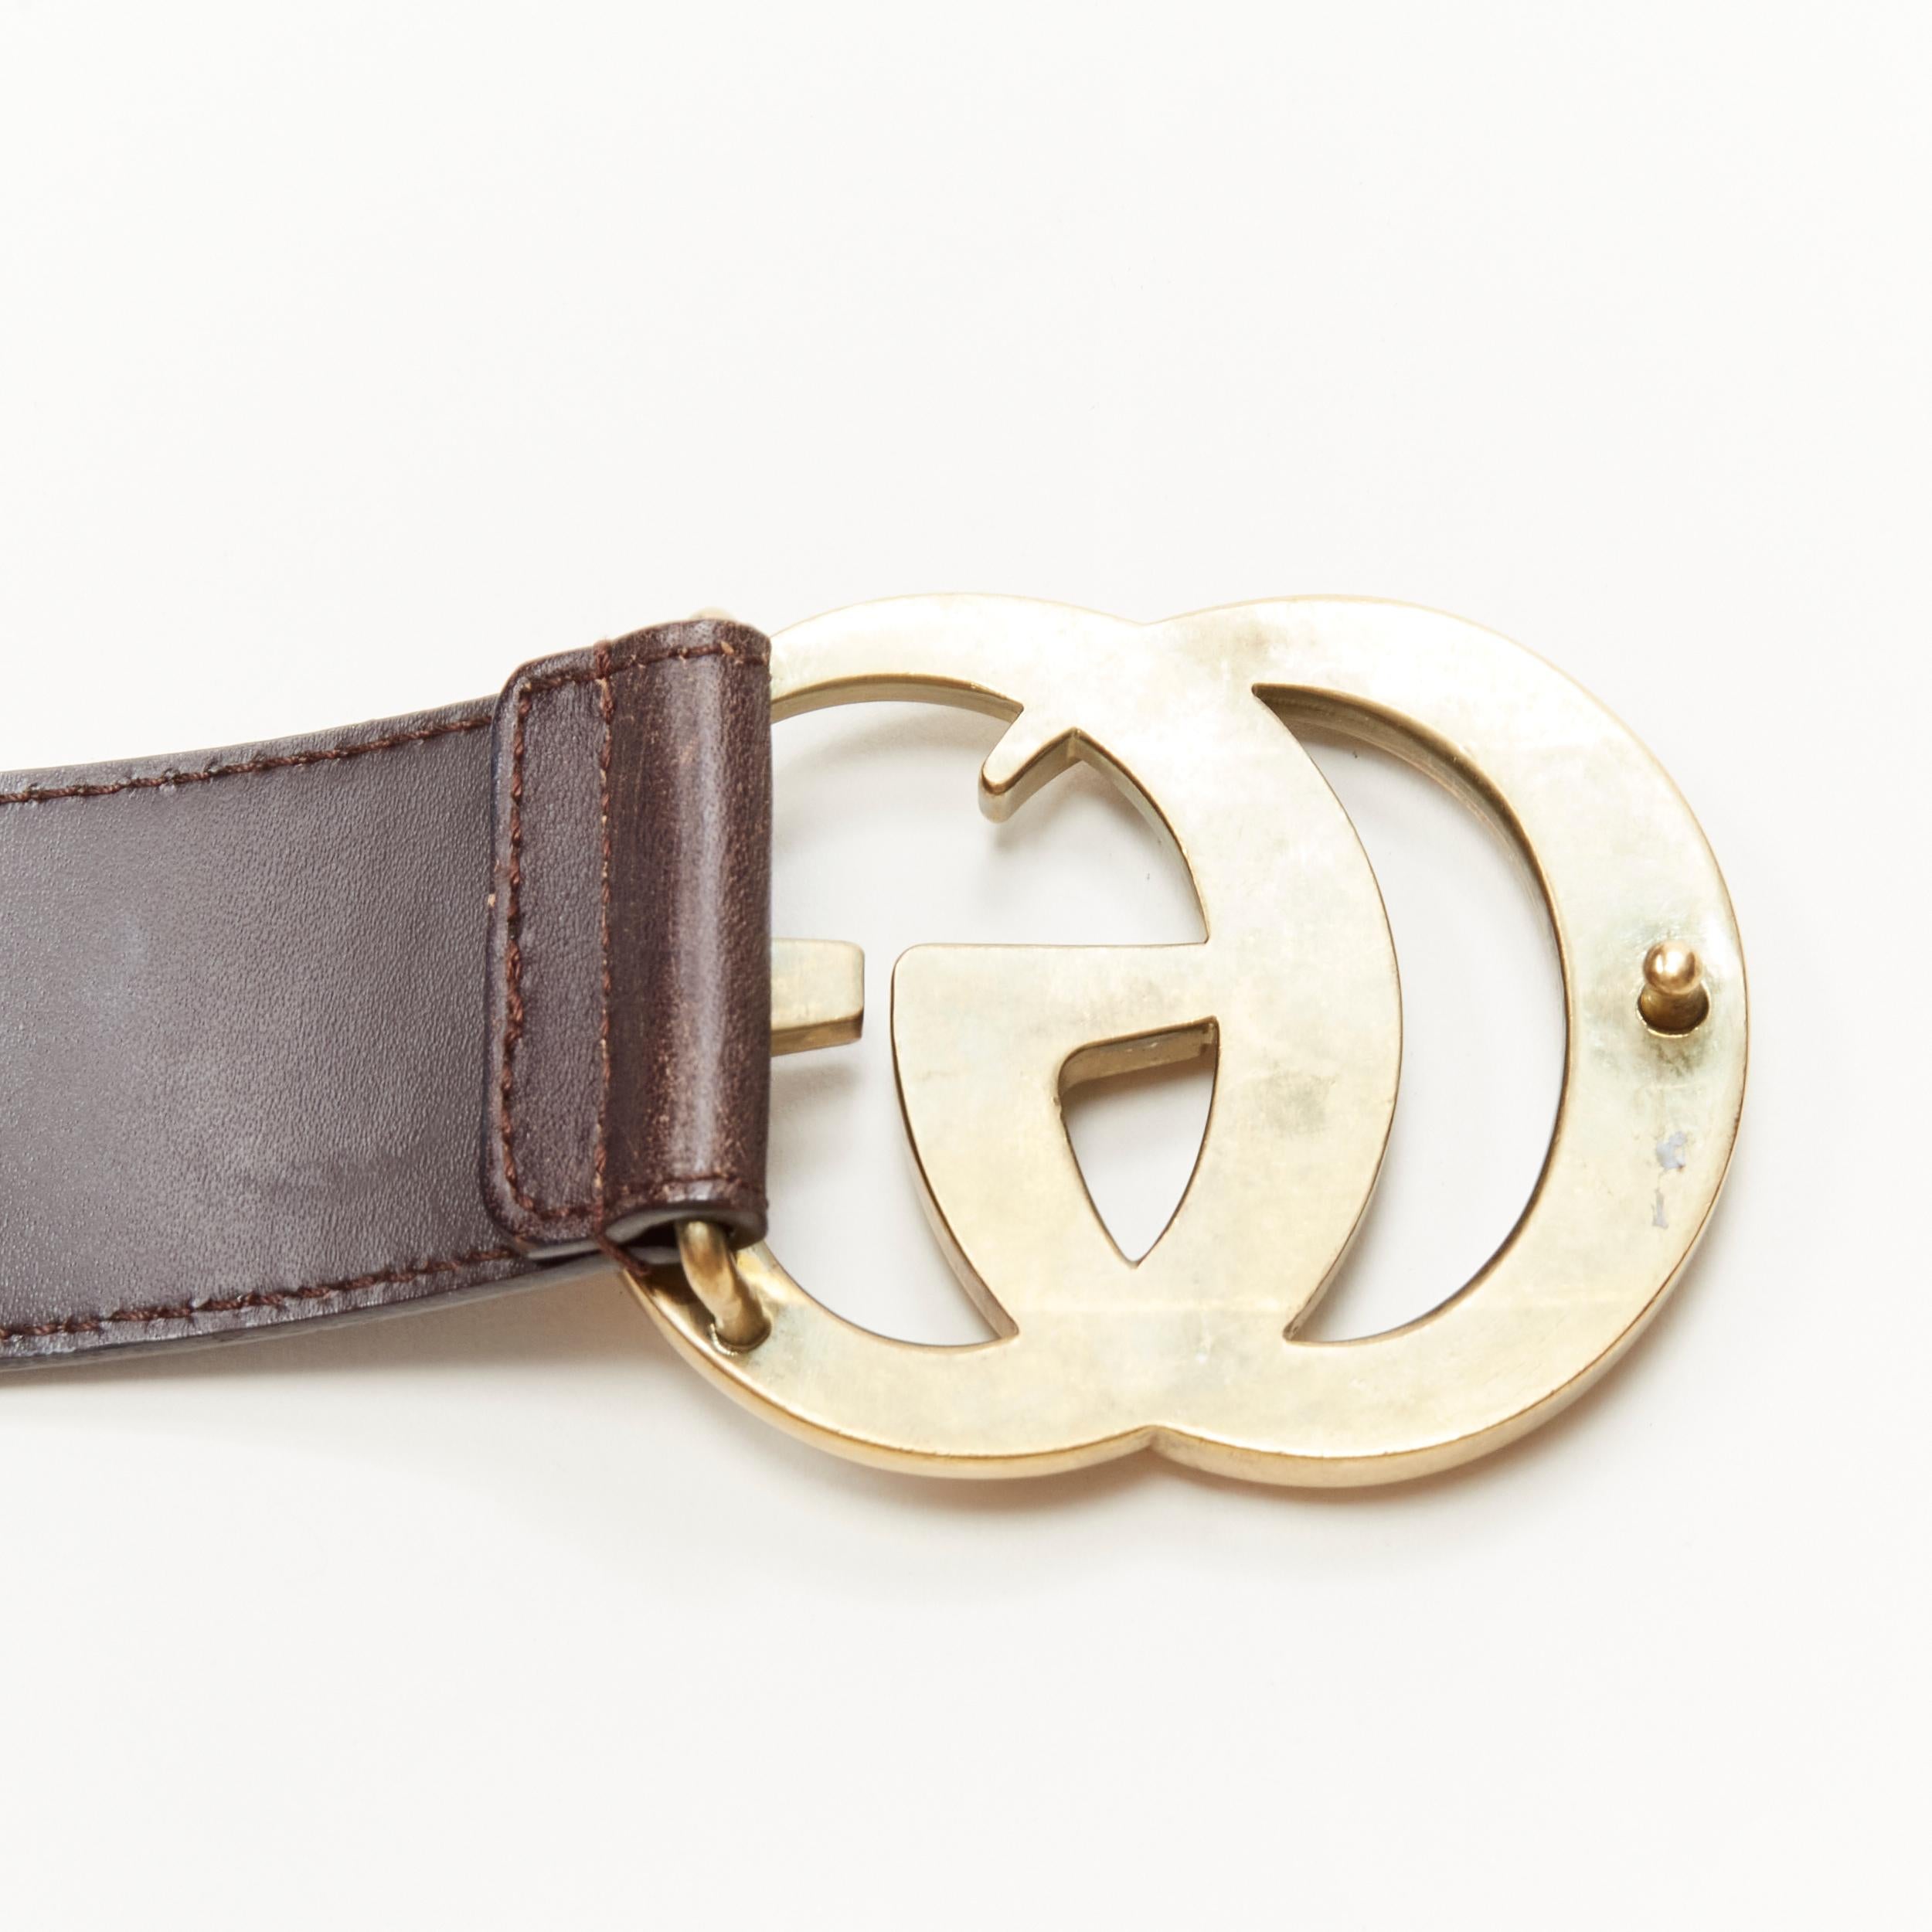 Black GUCCI Marmont GG buckle Vintage effect brushed brown leather belt 80cm 32